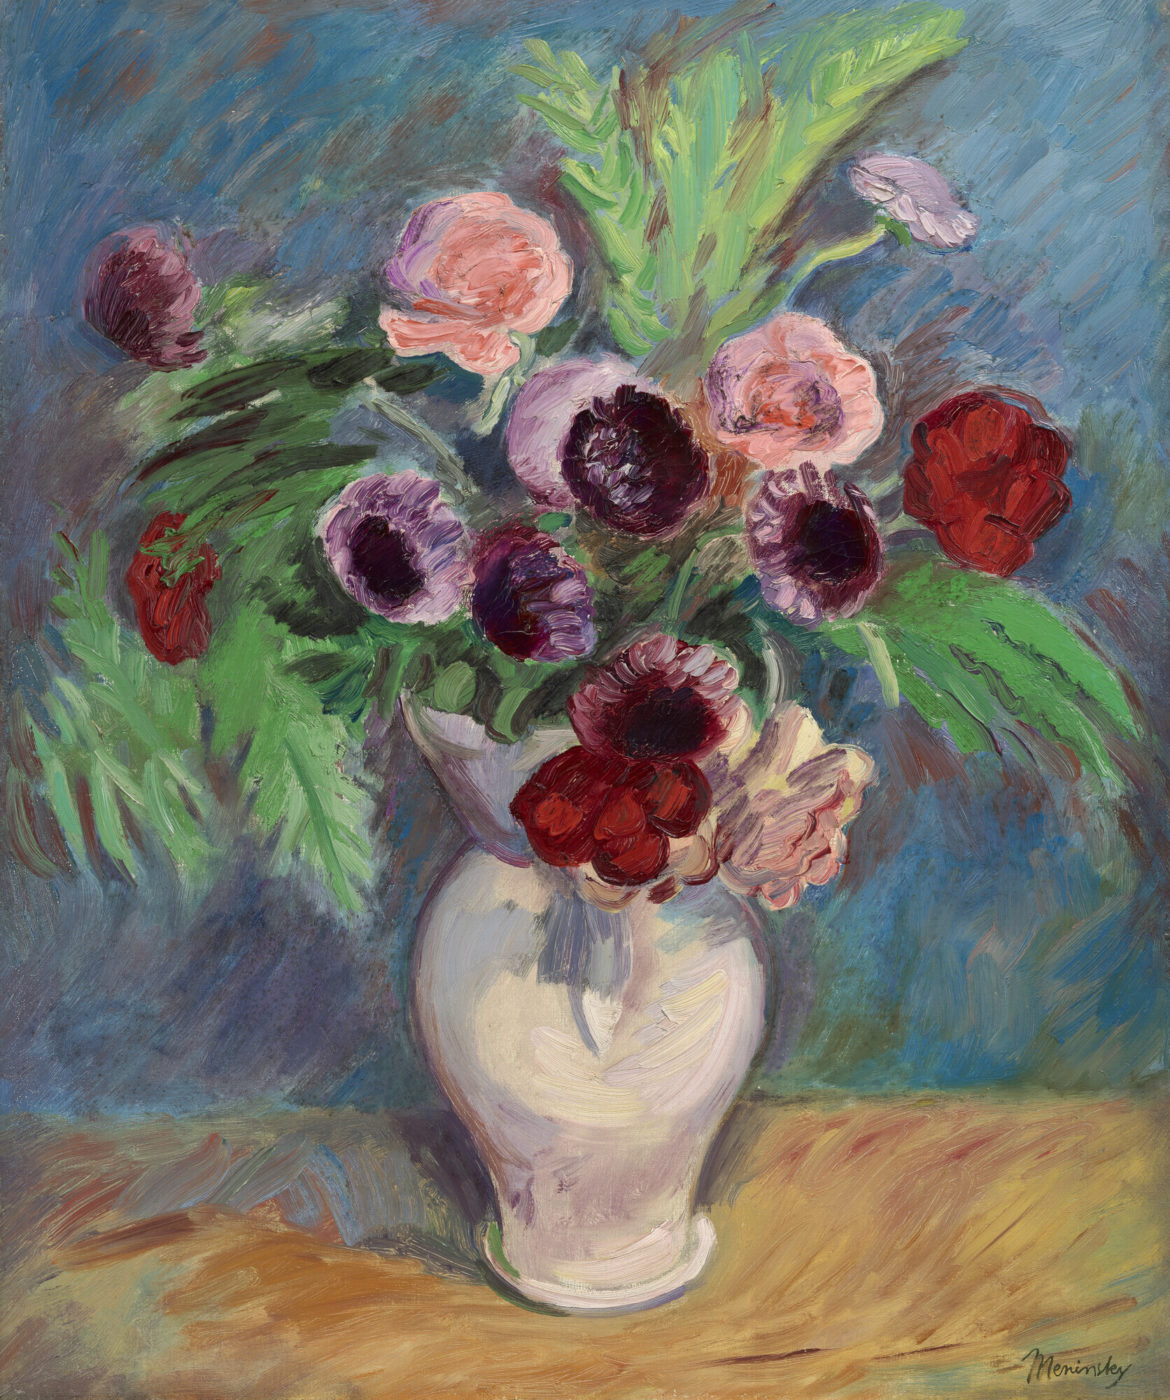 Bernard Meninsky (1891-1950), Poppies and Roses